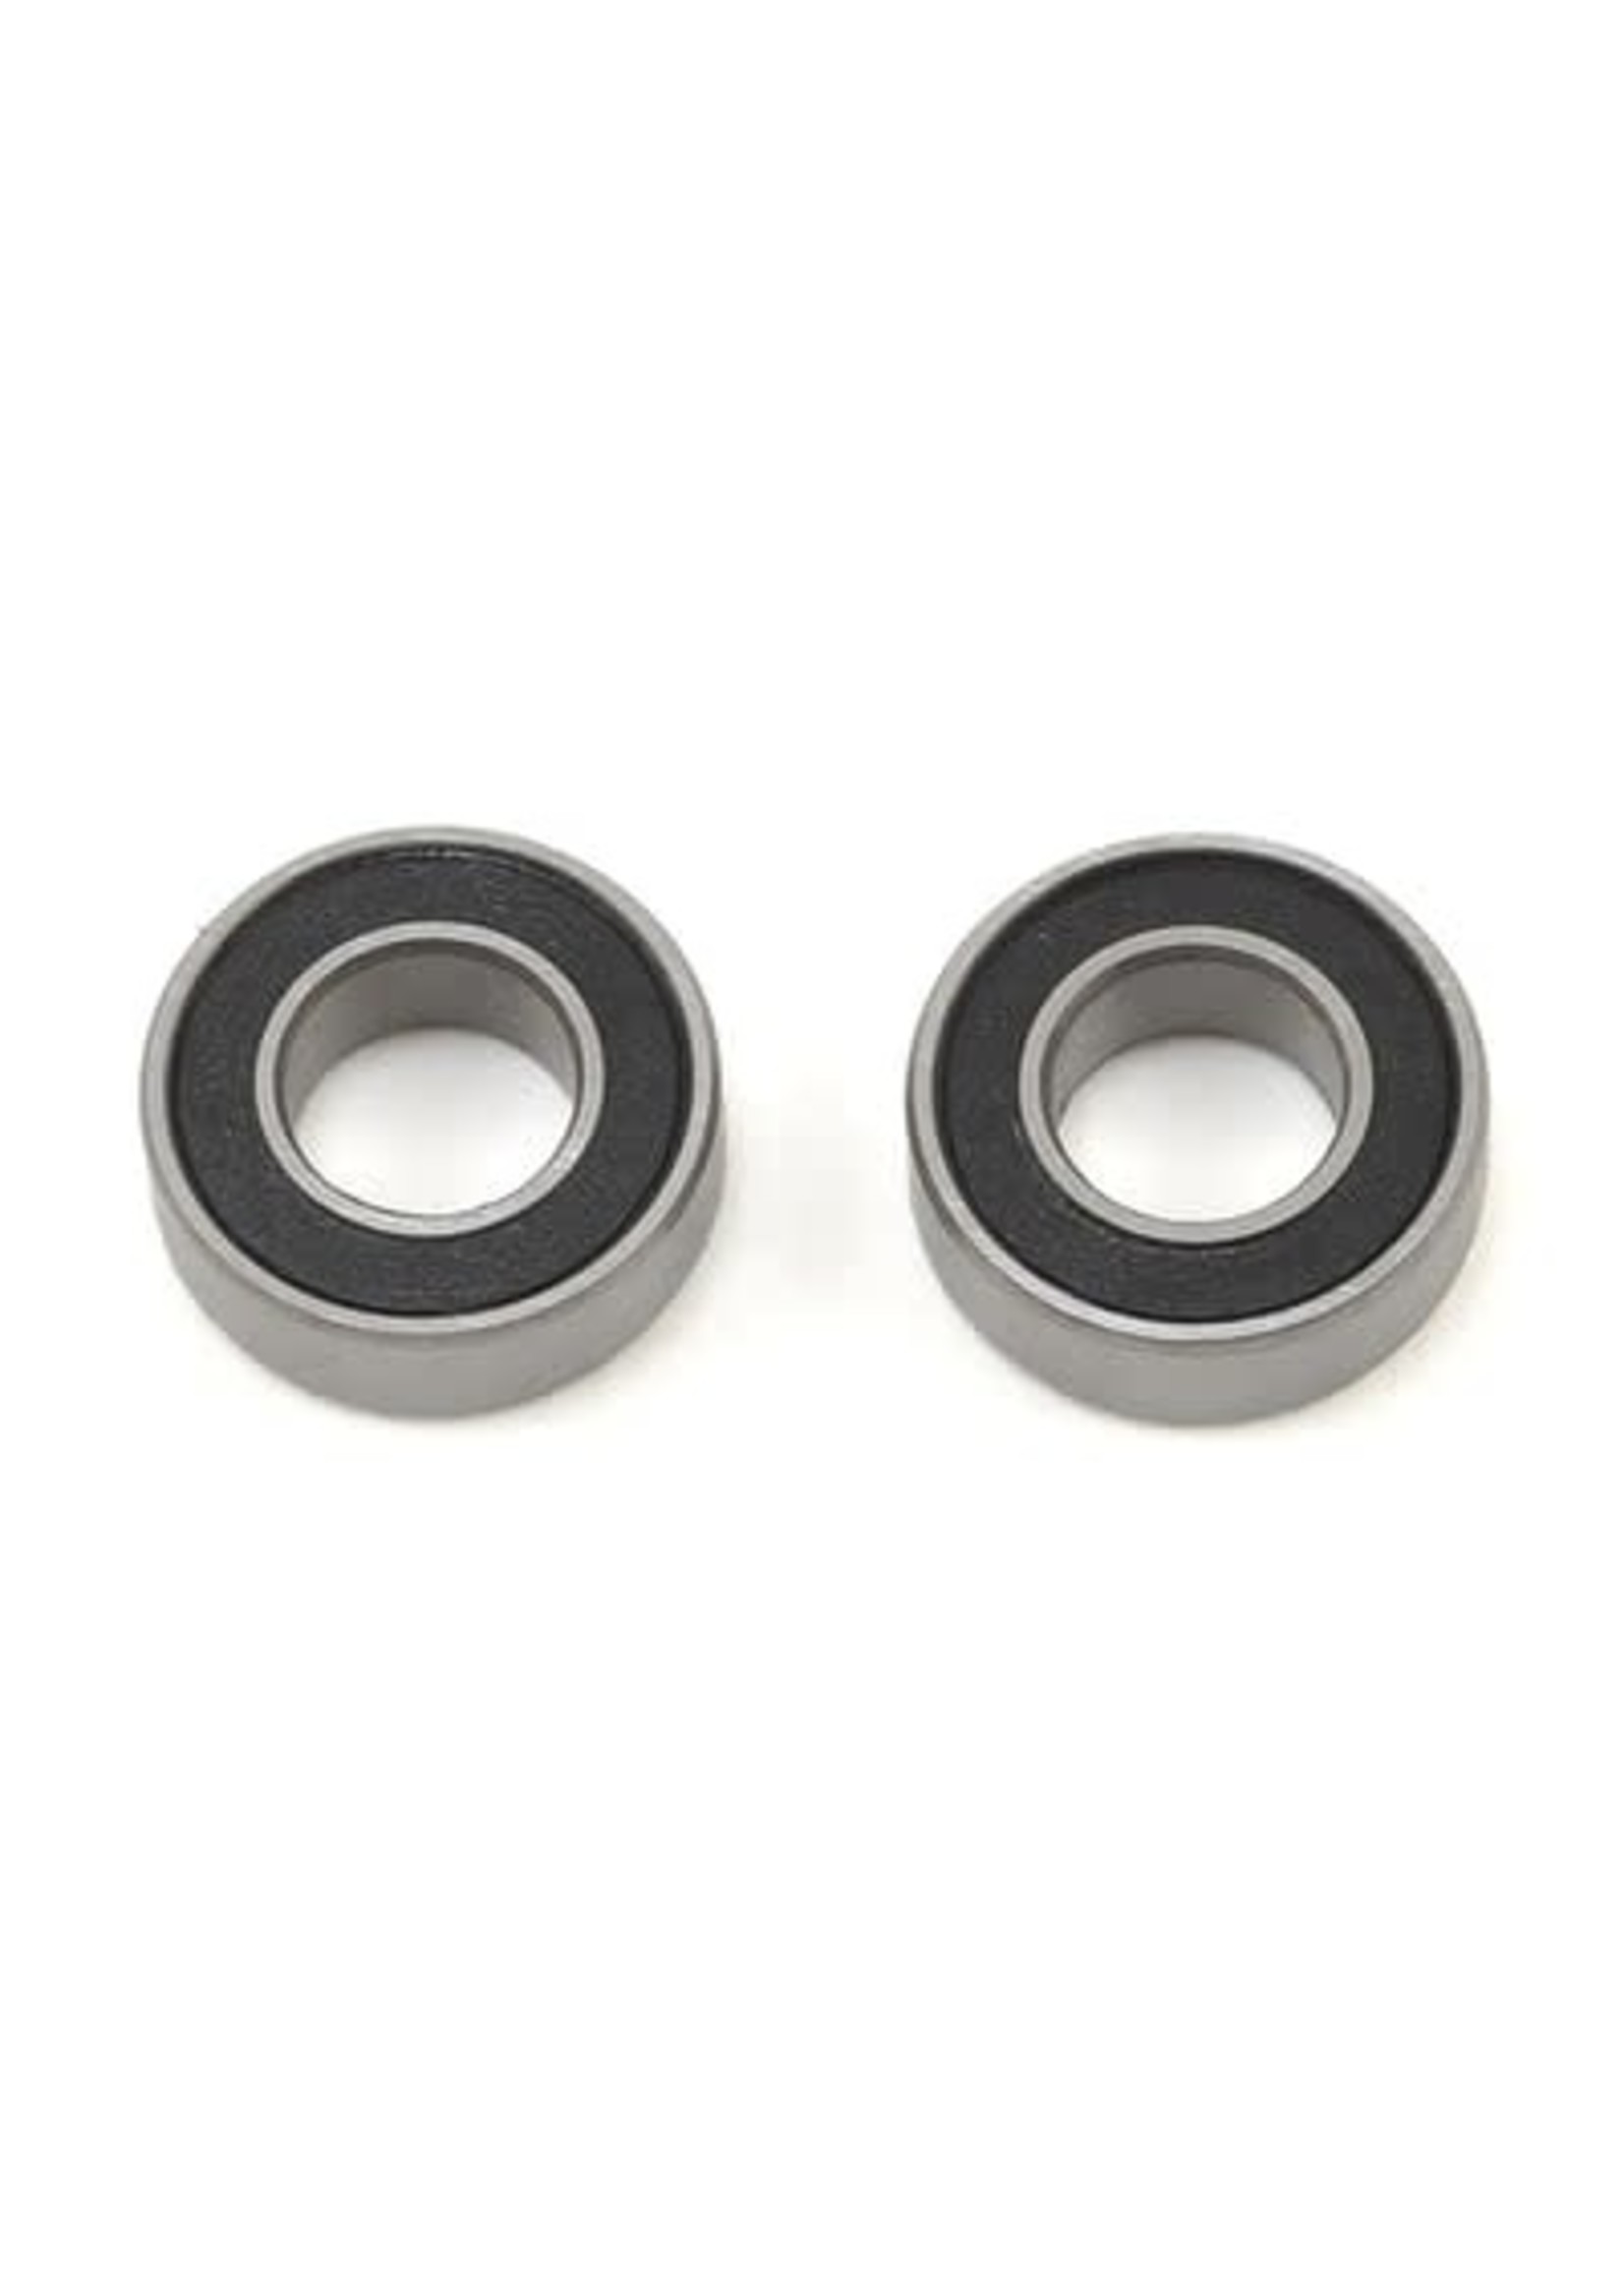 Traxxas 5117A Ball bearings, black rubber sealed (6x12x4mm) (2)